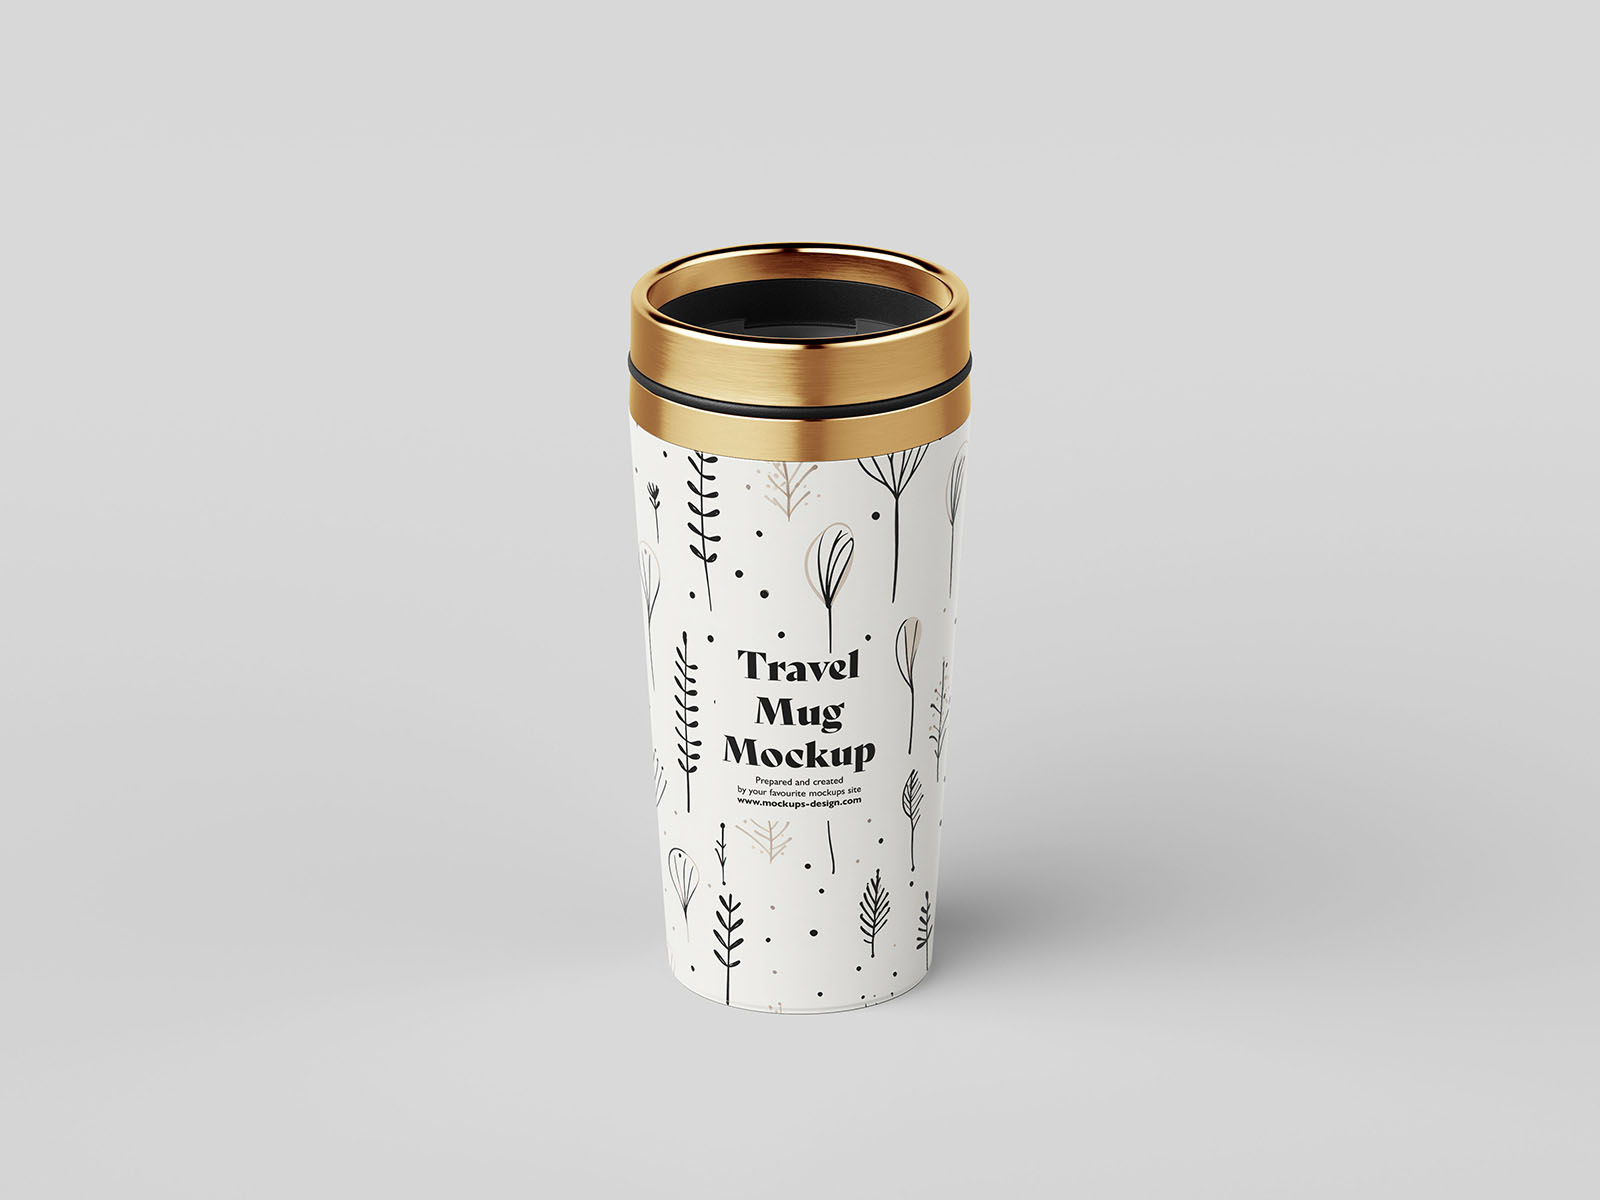 Travel mug mockup